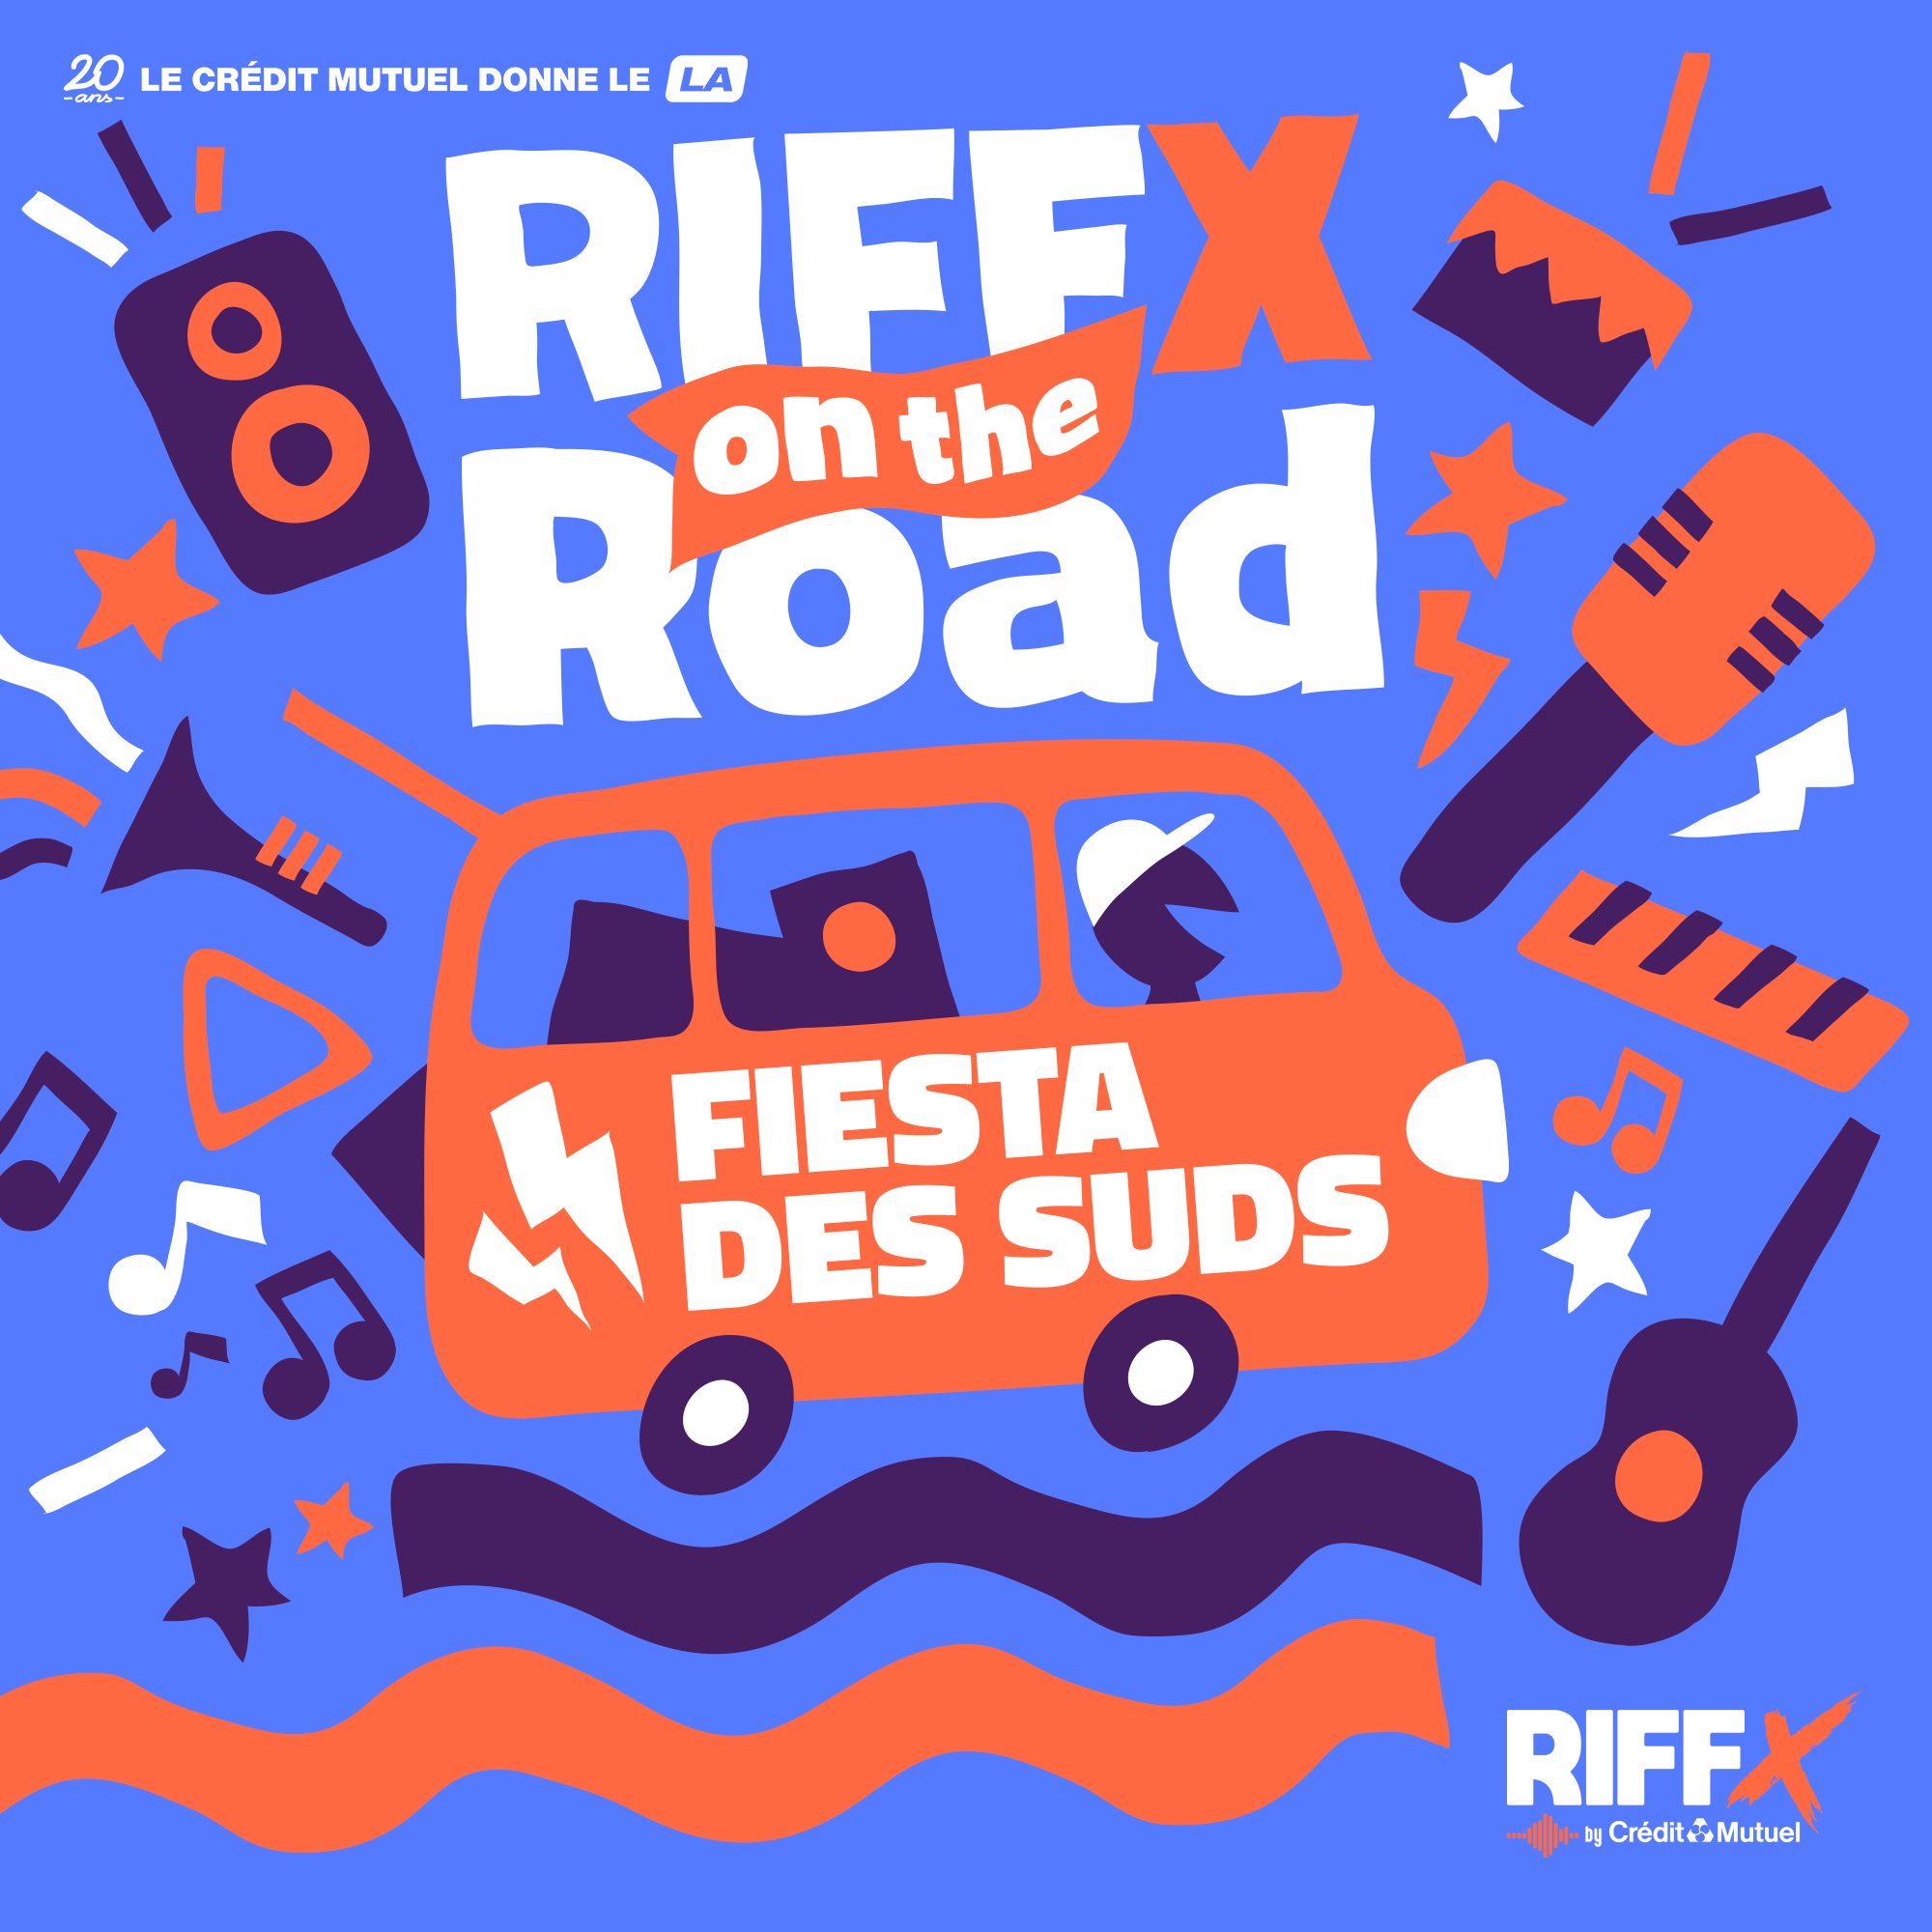 RIFFX on the Road à la Fiesta des Suds